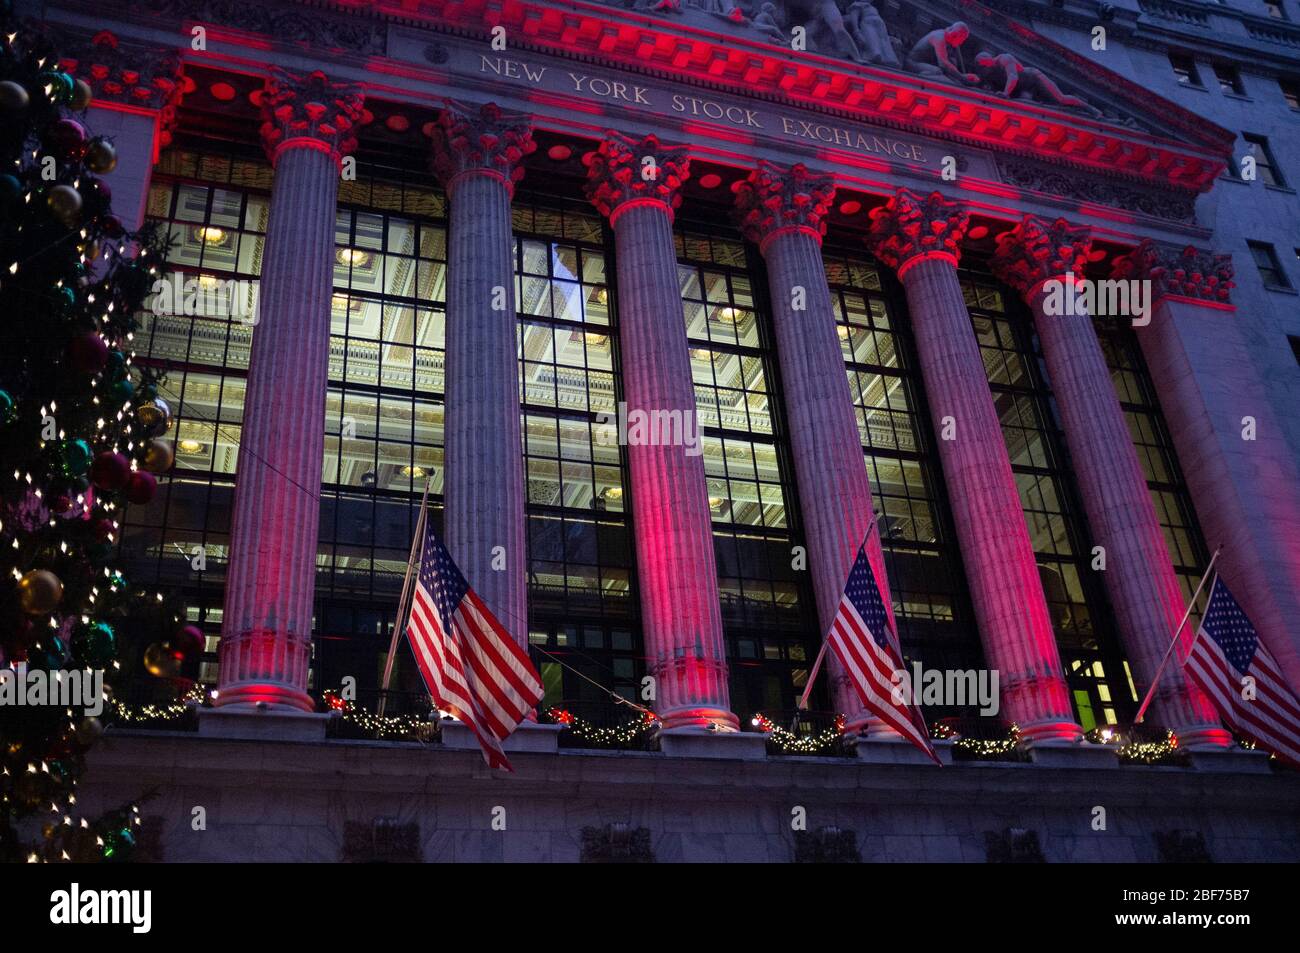 The New York Stock Exchange at Christmas time. Manhattan, New York. Stock Photo